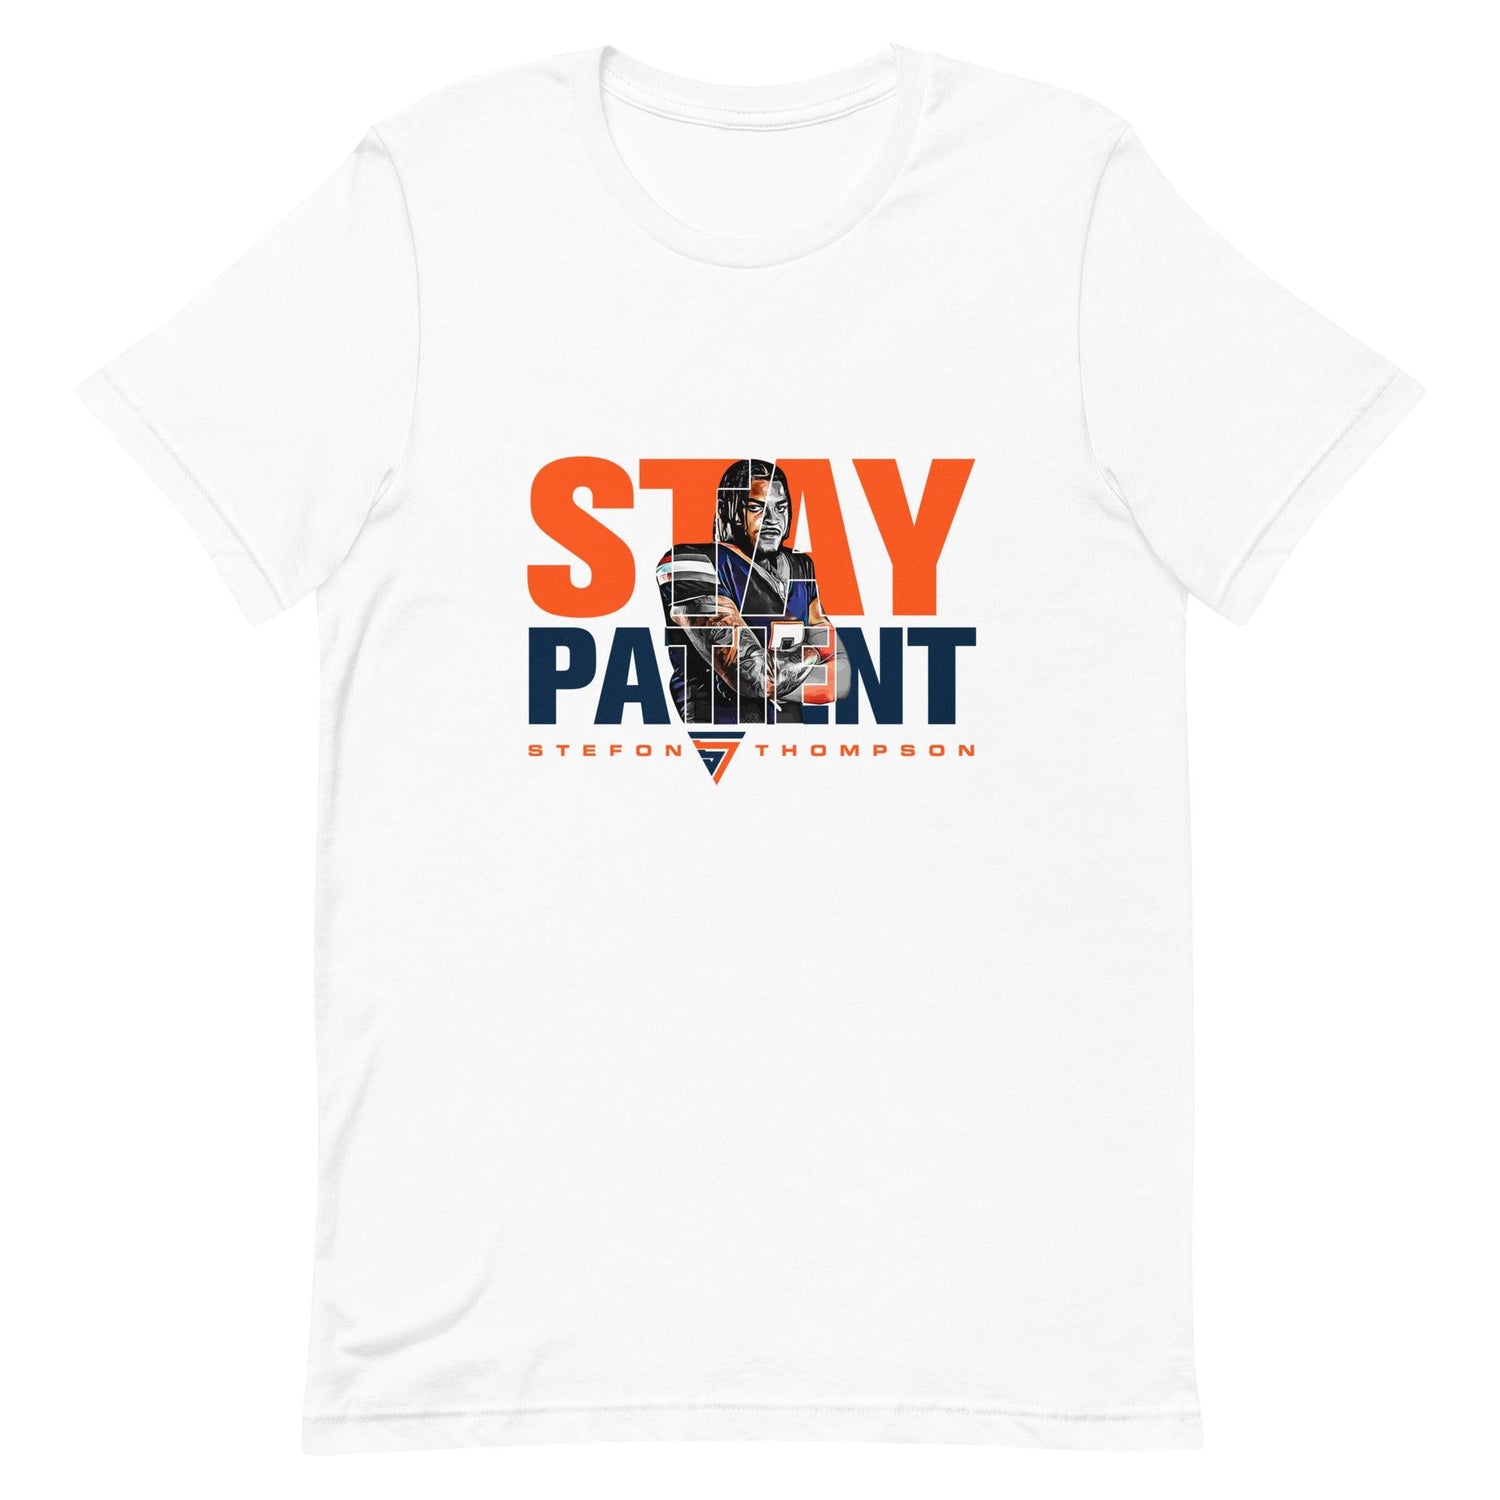 Stefon Thompson "Stay Patient" t-shirt - Fan Arch